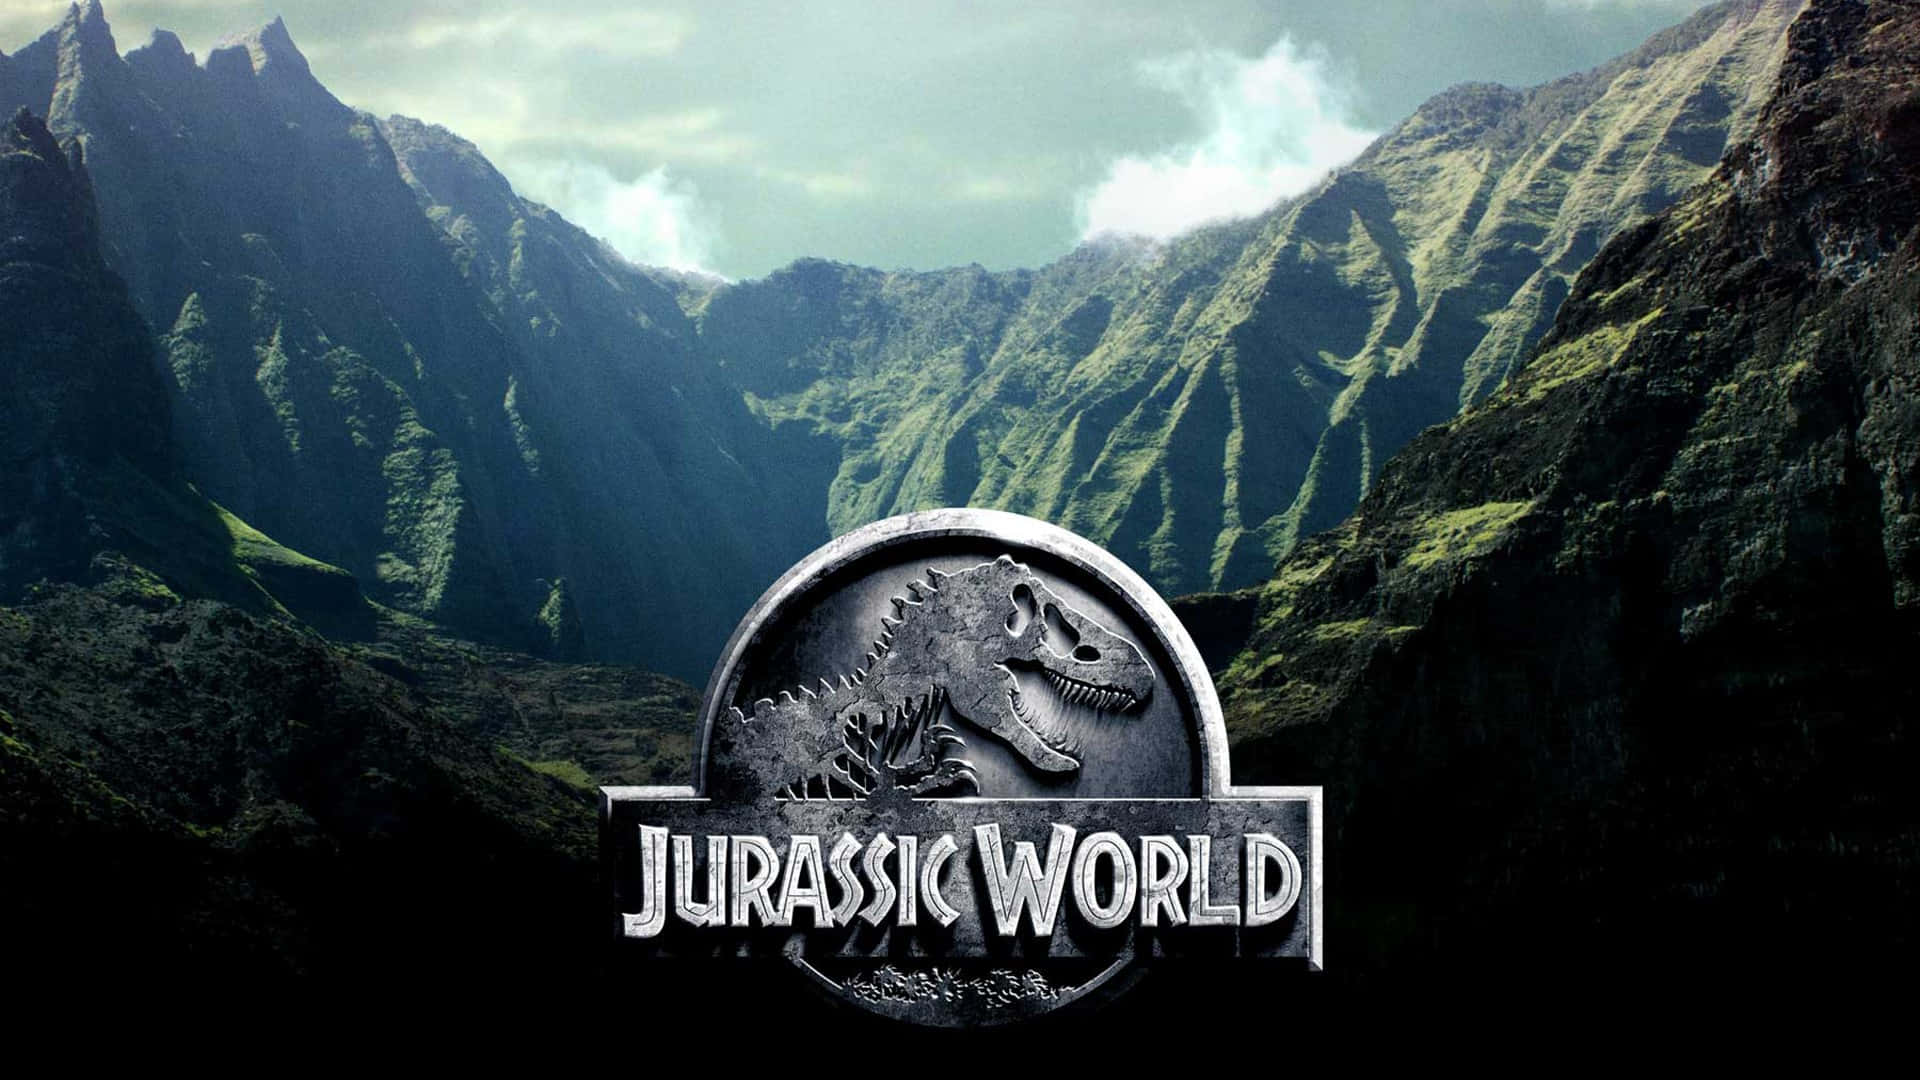 Jurassicworld Logo Med Bjerge I Baggrunden.